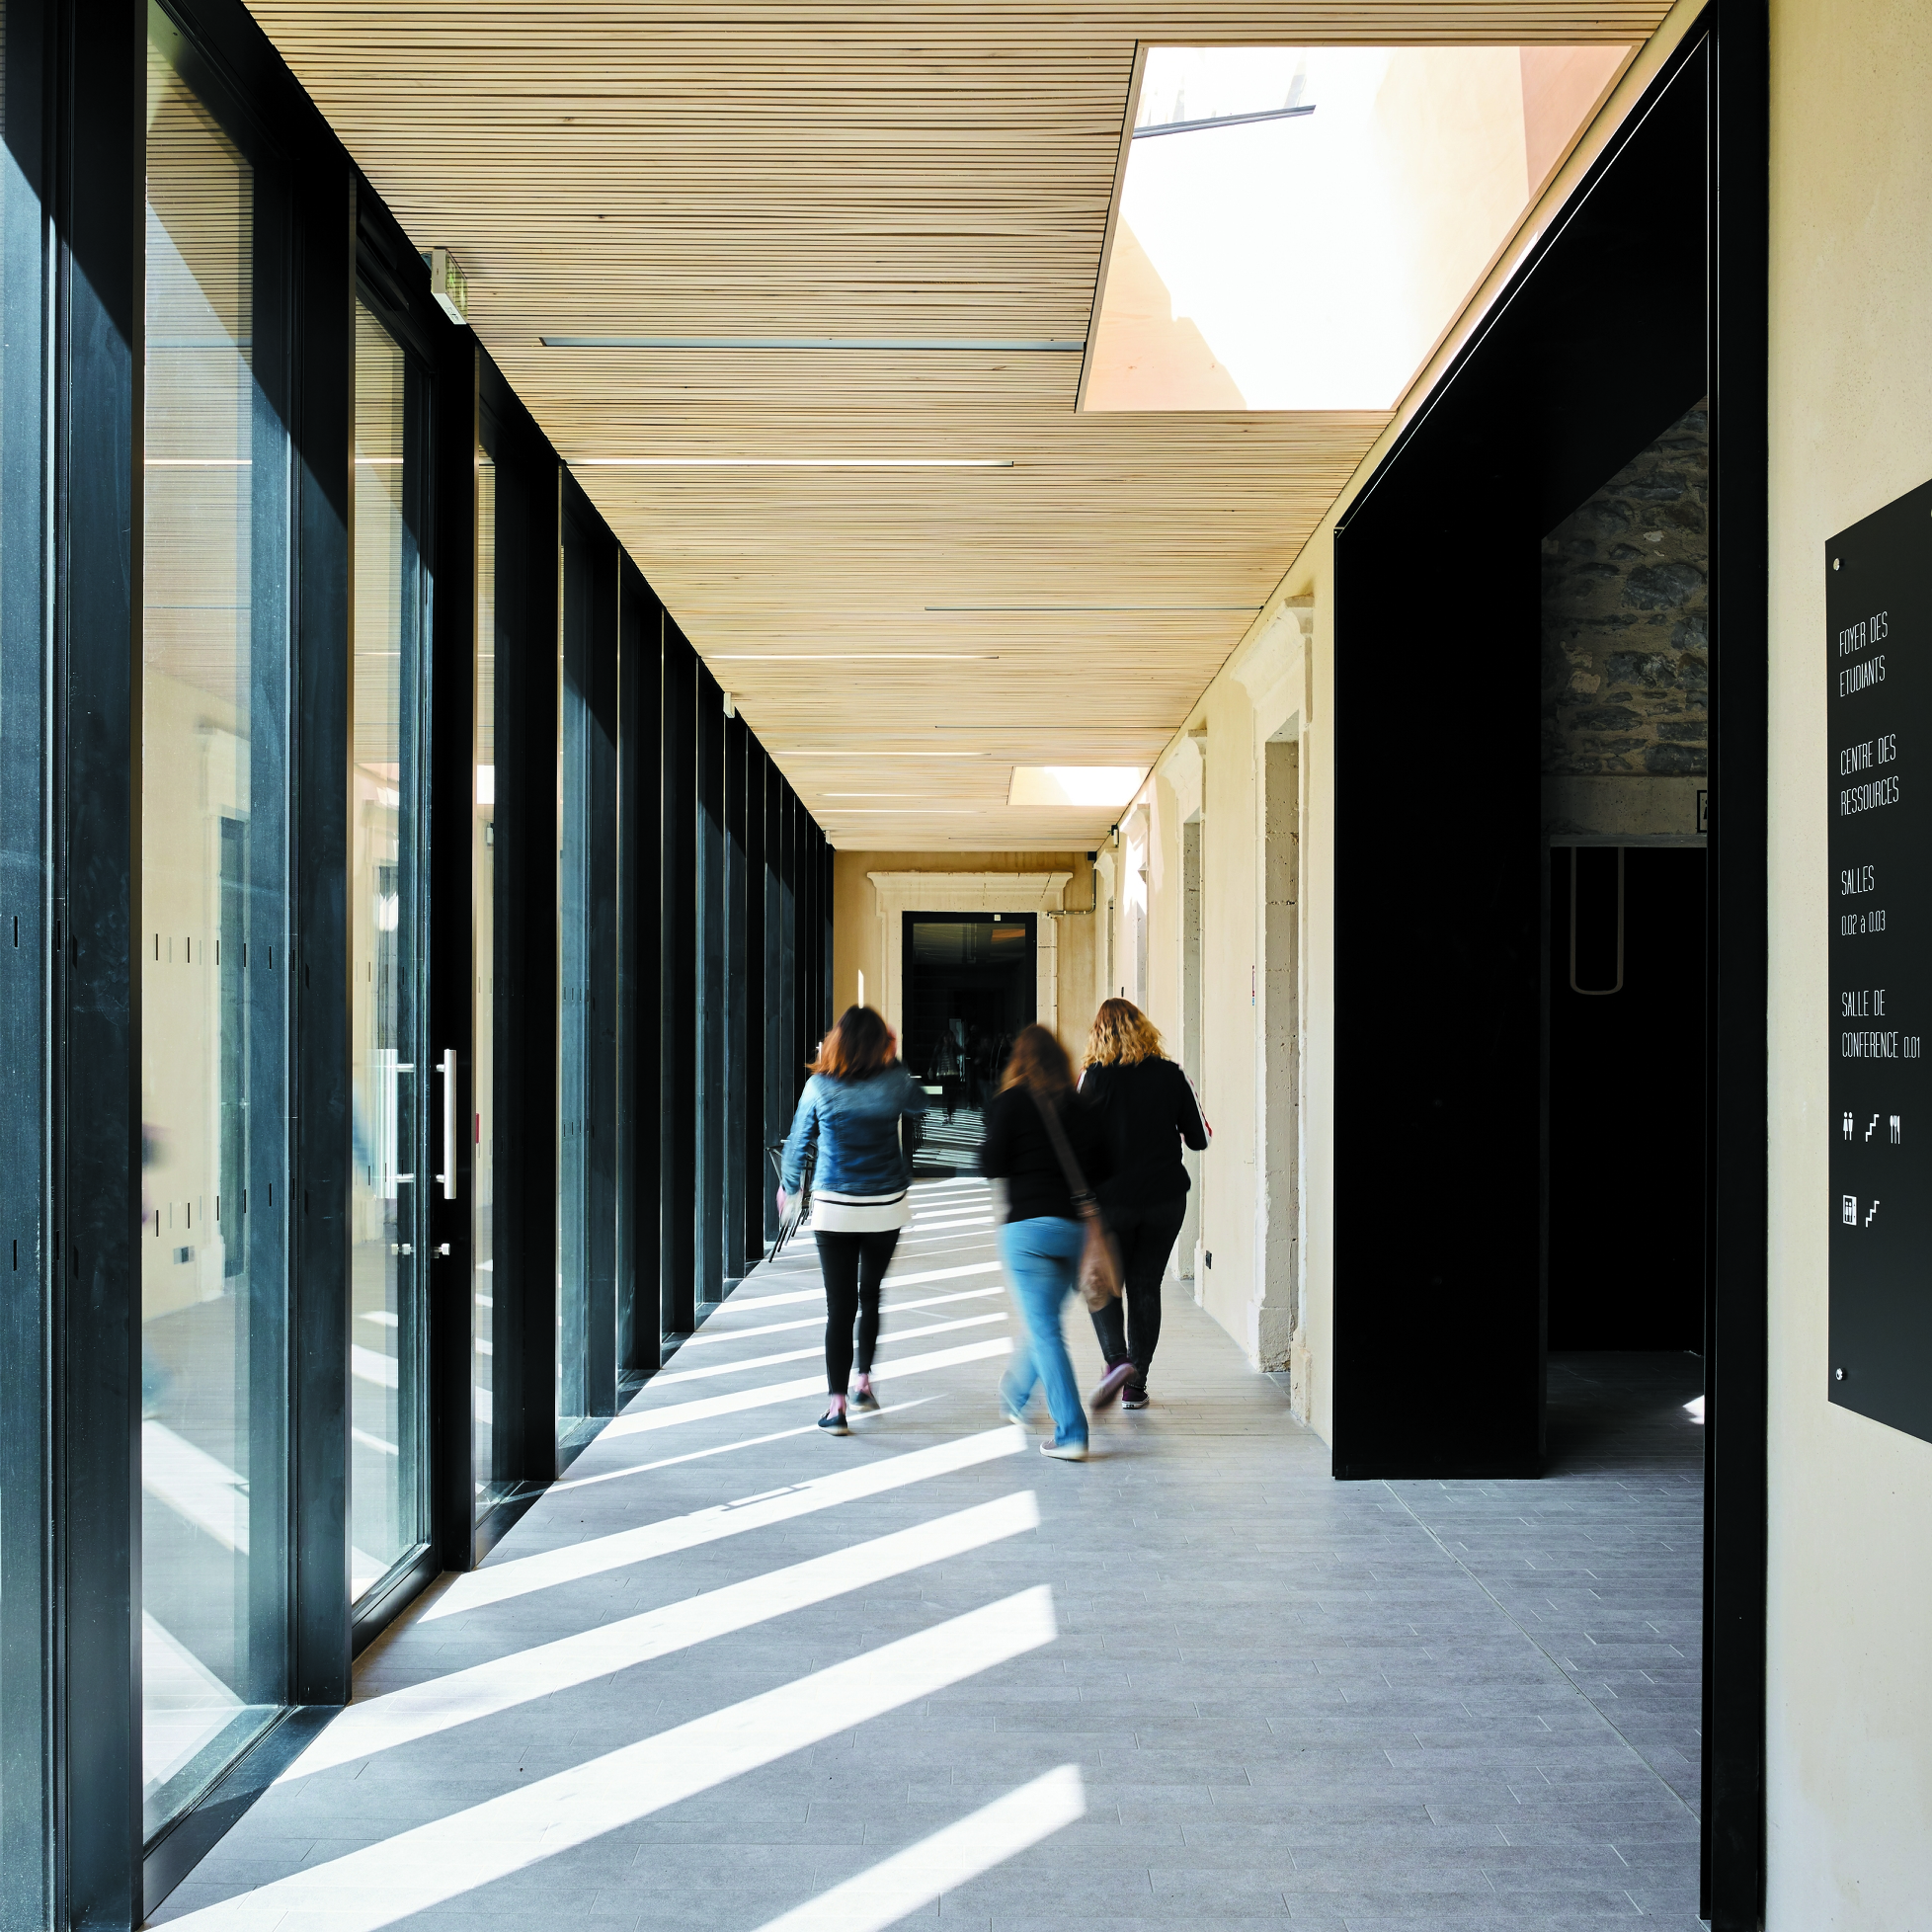 University Centre, Cahors, France - Image 1